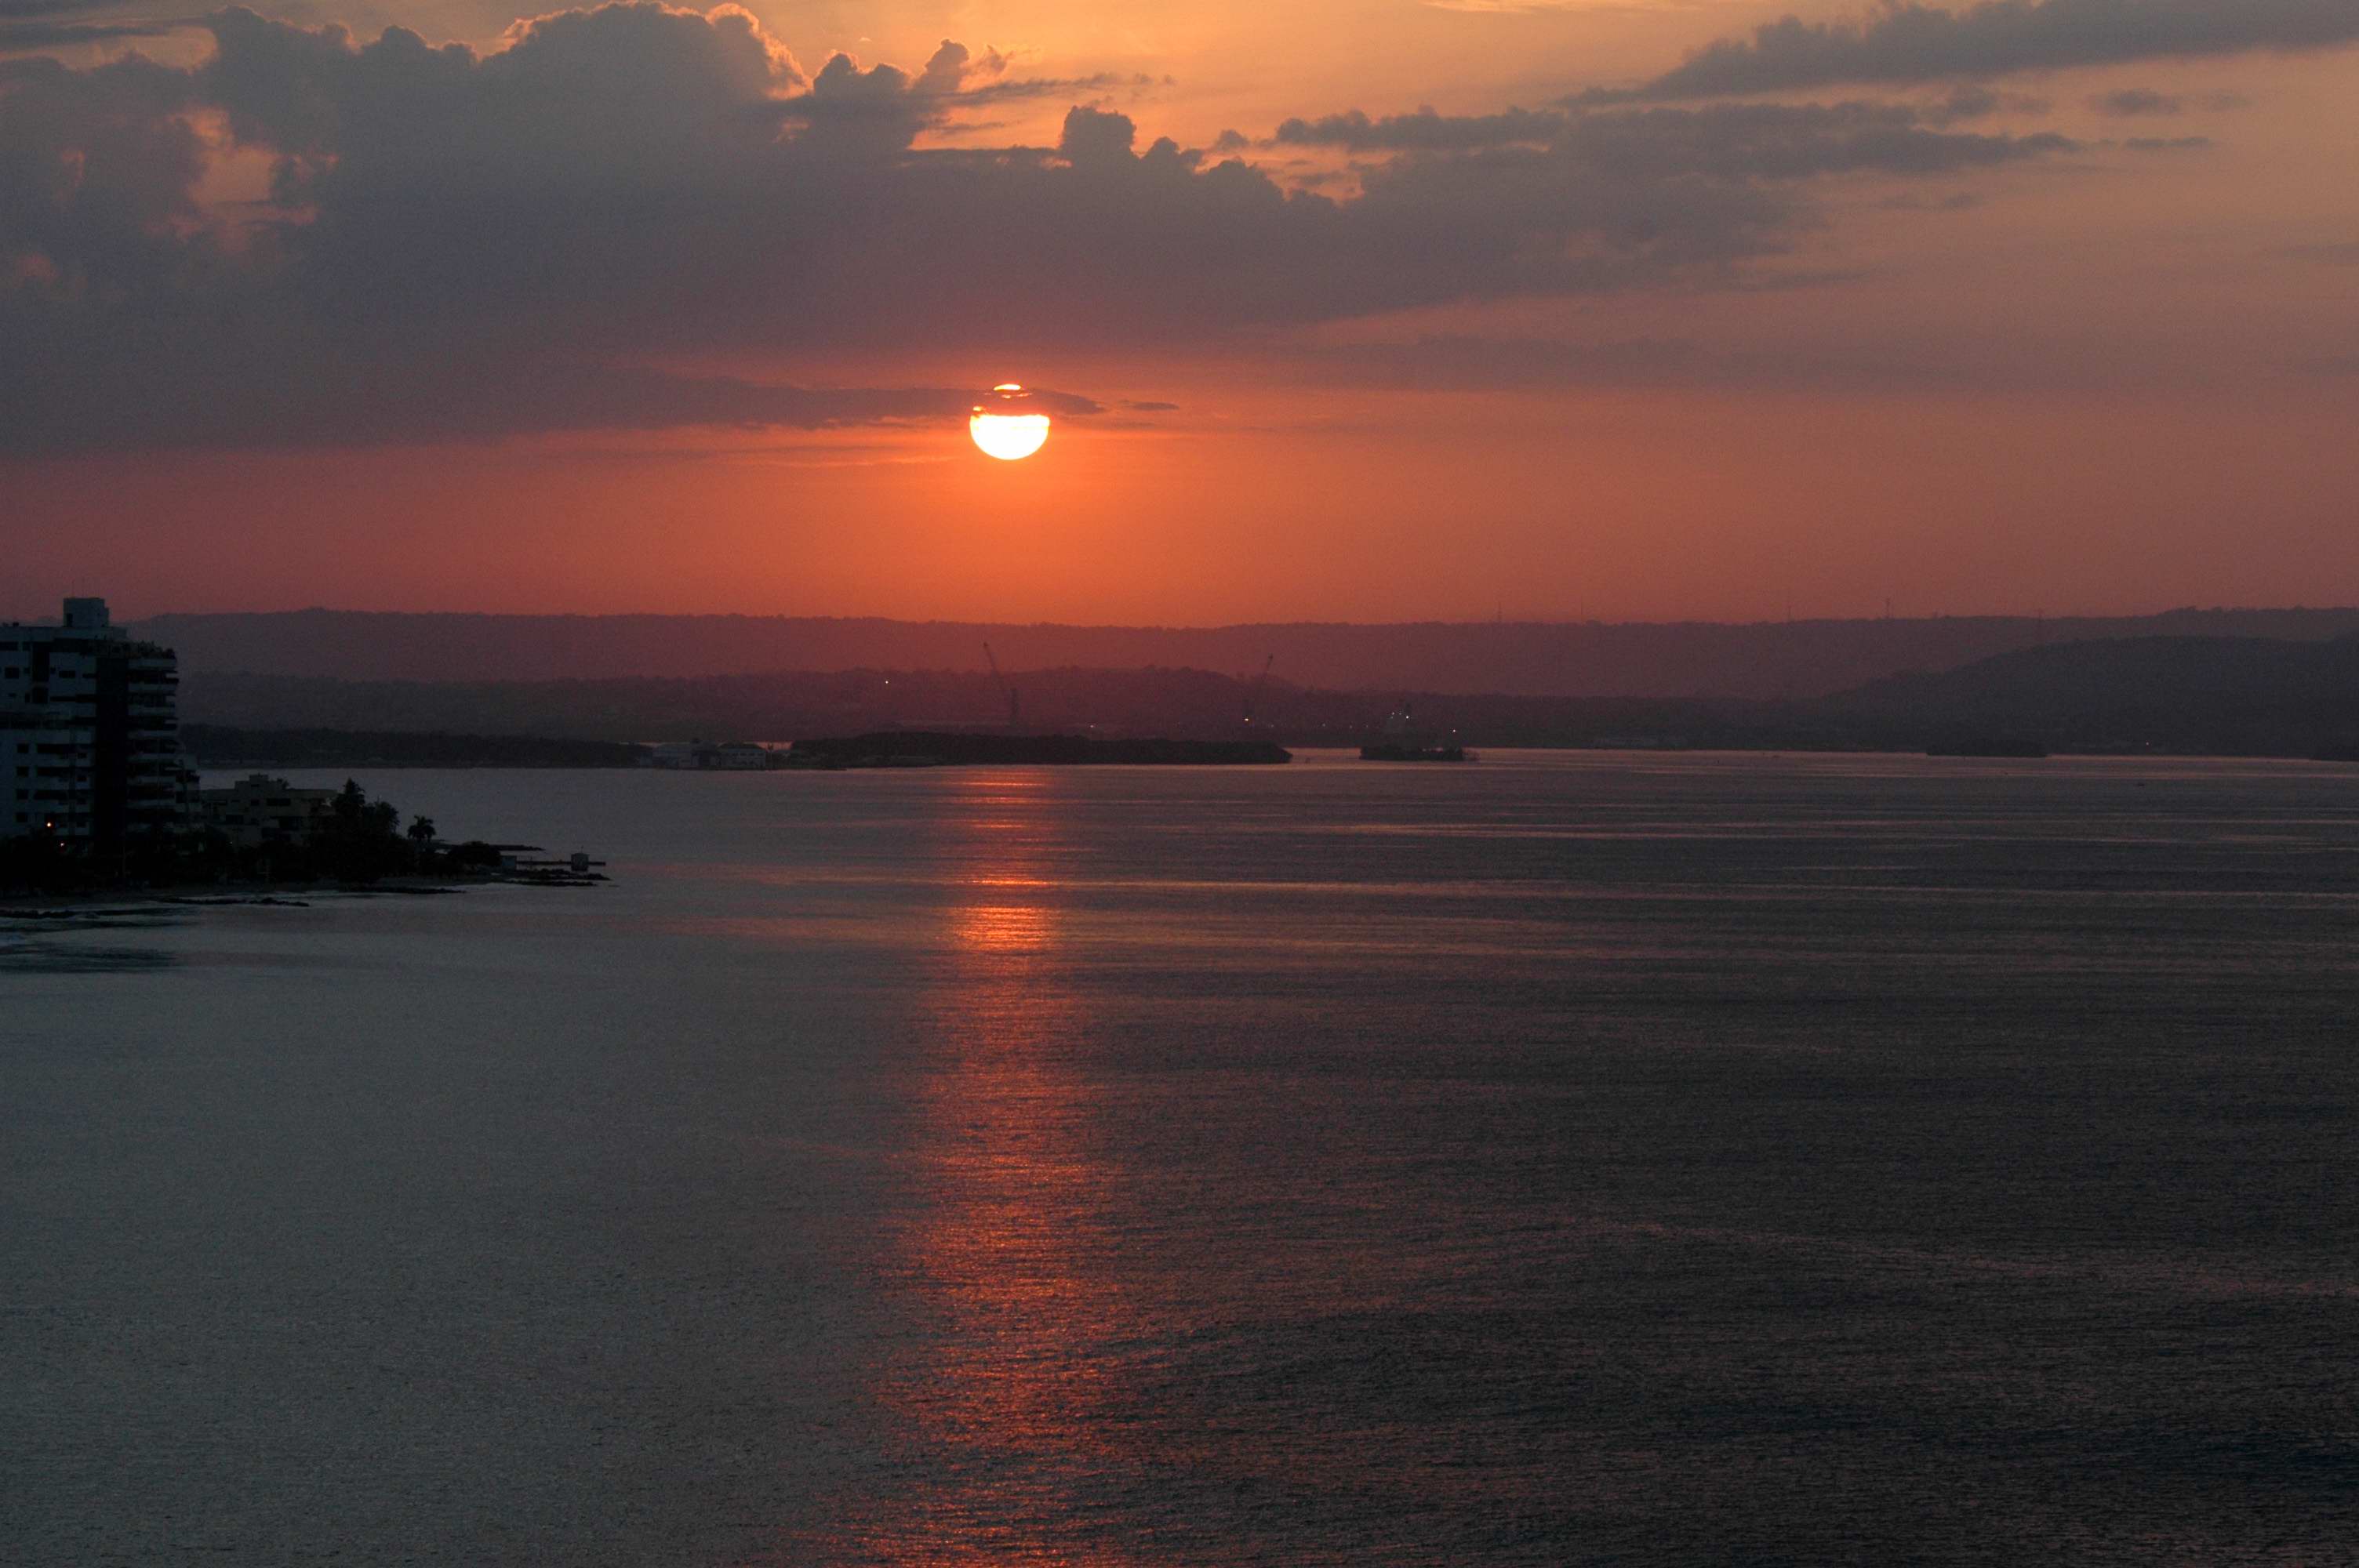 Sunrise in Cartagena Bay